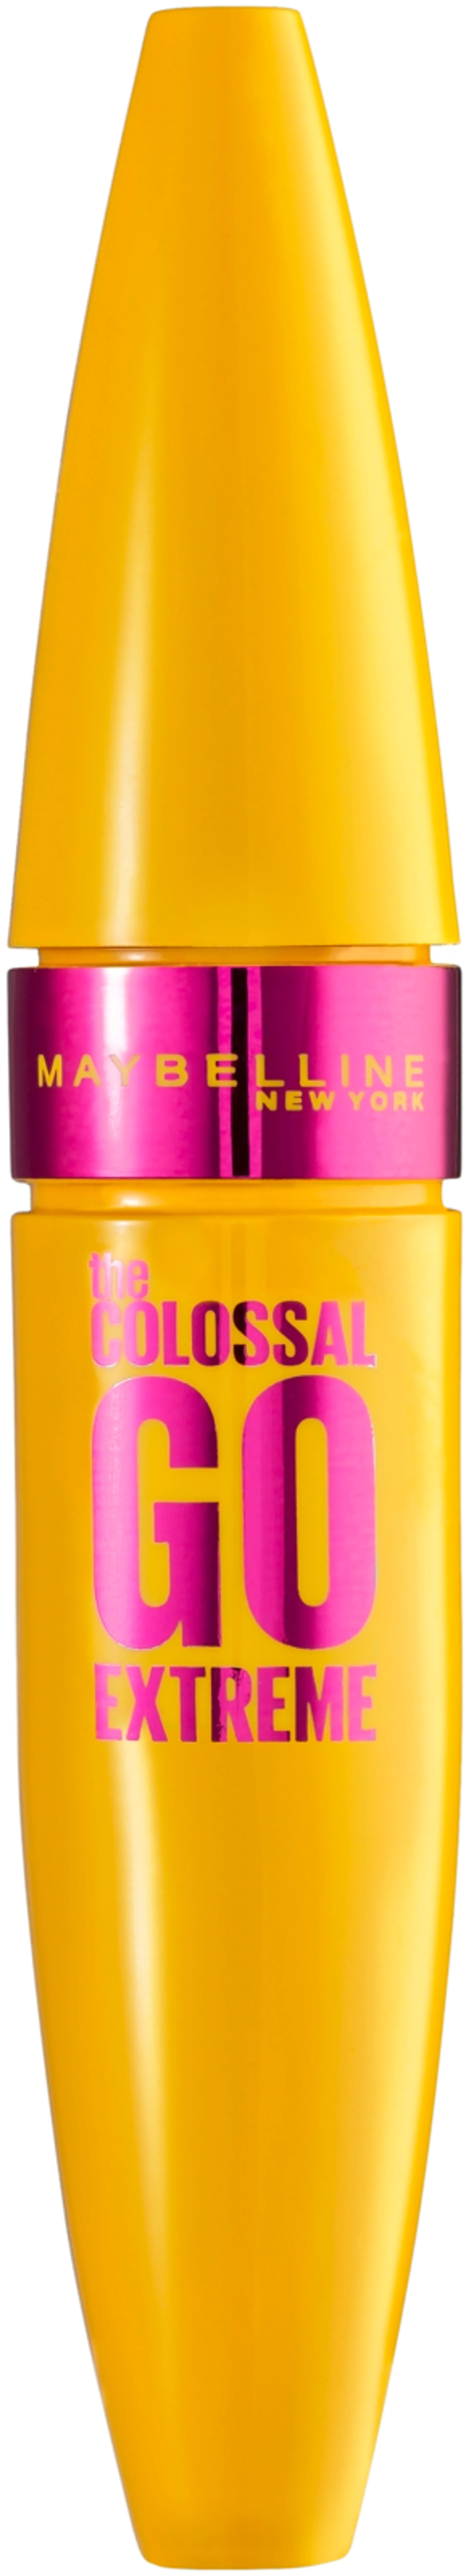 Maybelline New York Colossal Go Extreme 01 Very Black -maskara 9,5ml - 2